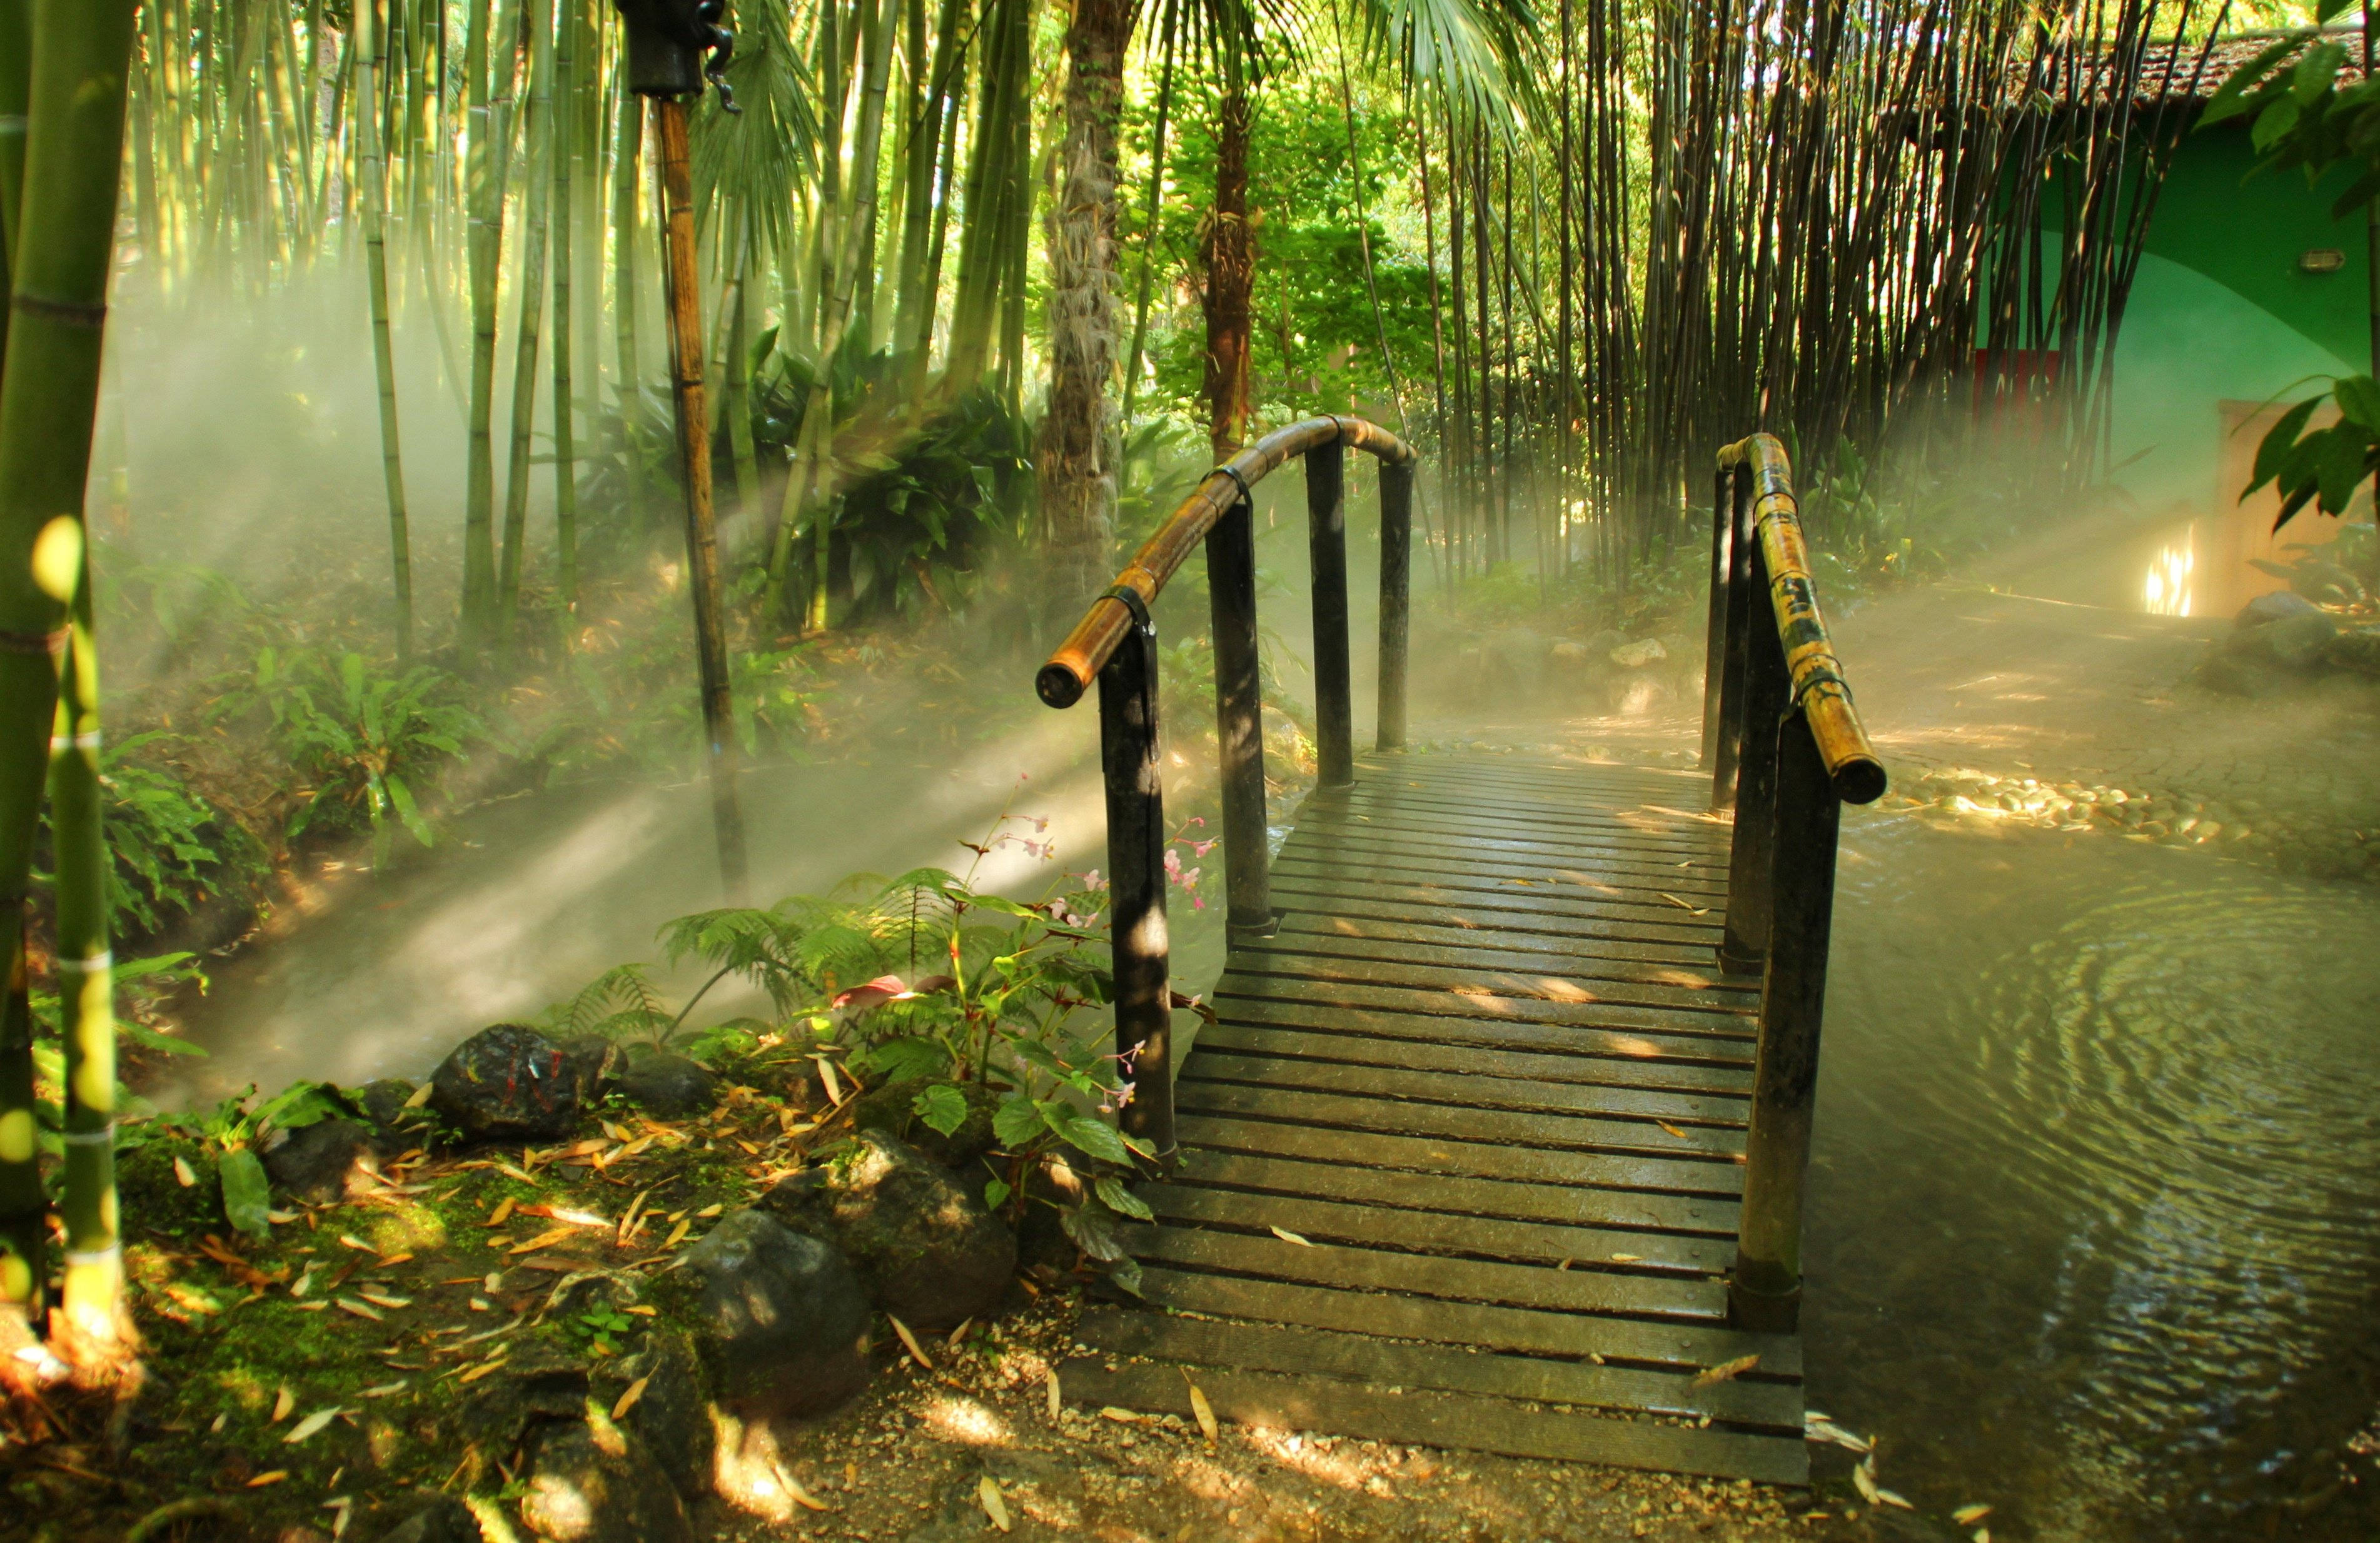 Download Bamboo 4k Forest Garden With Bridge Wallpaper 